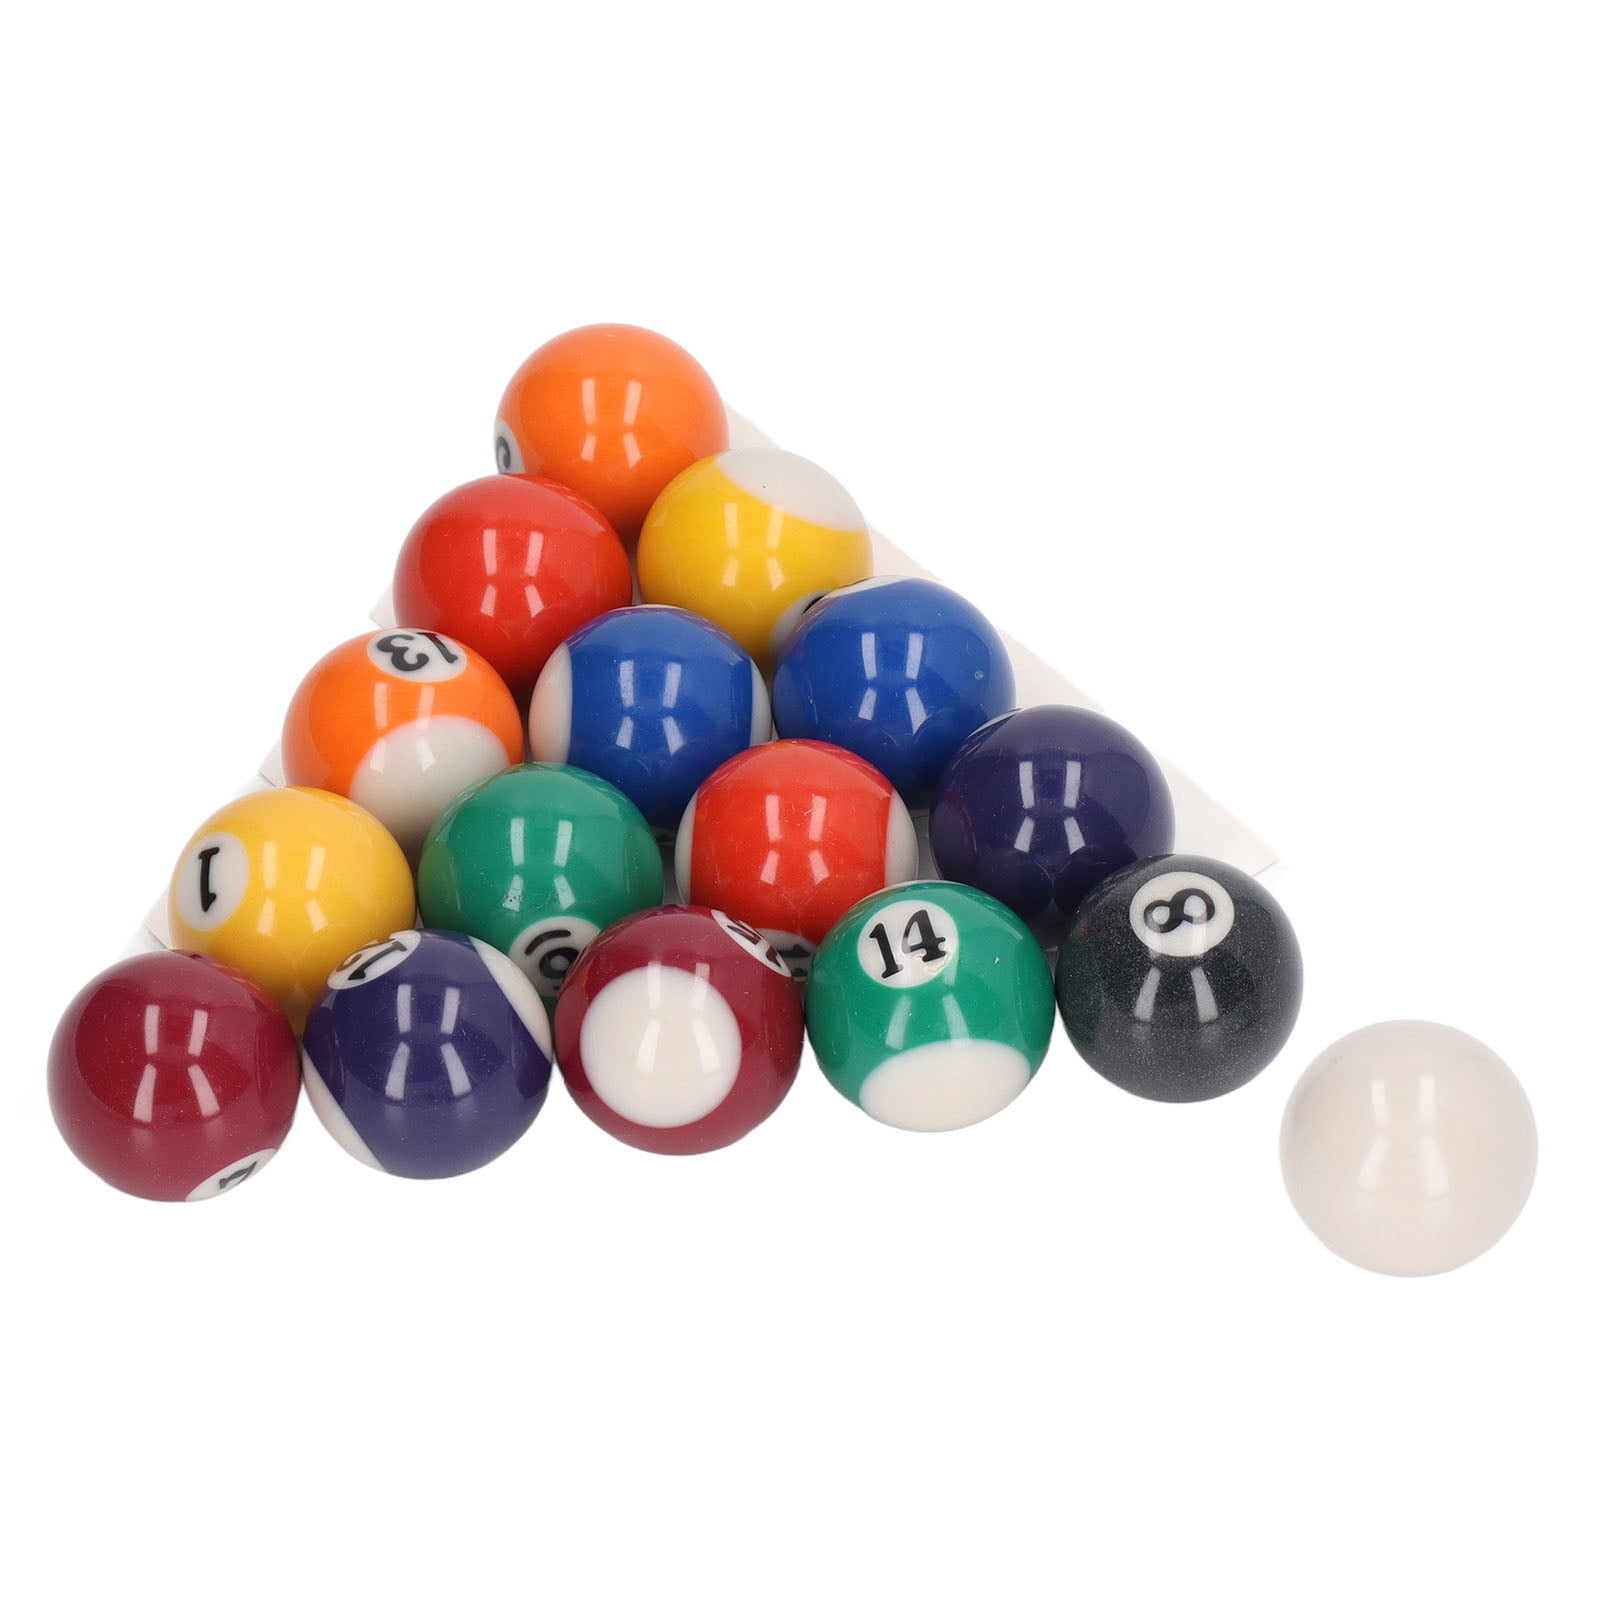 Ecd germany Billiard Accessories Set Multicolor